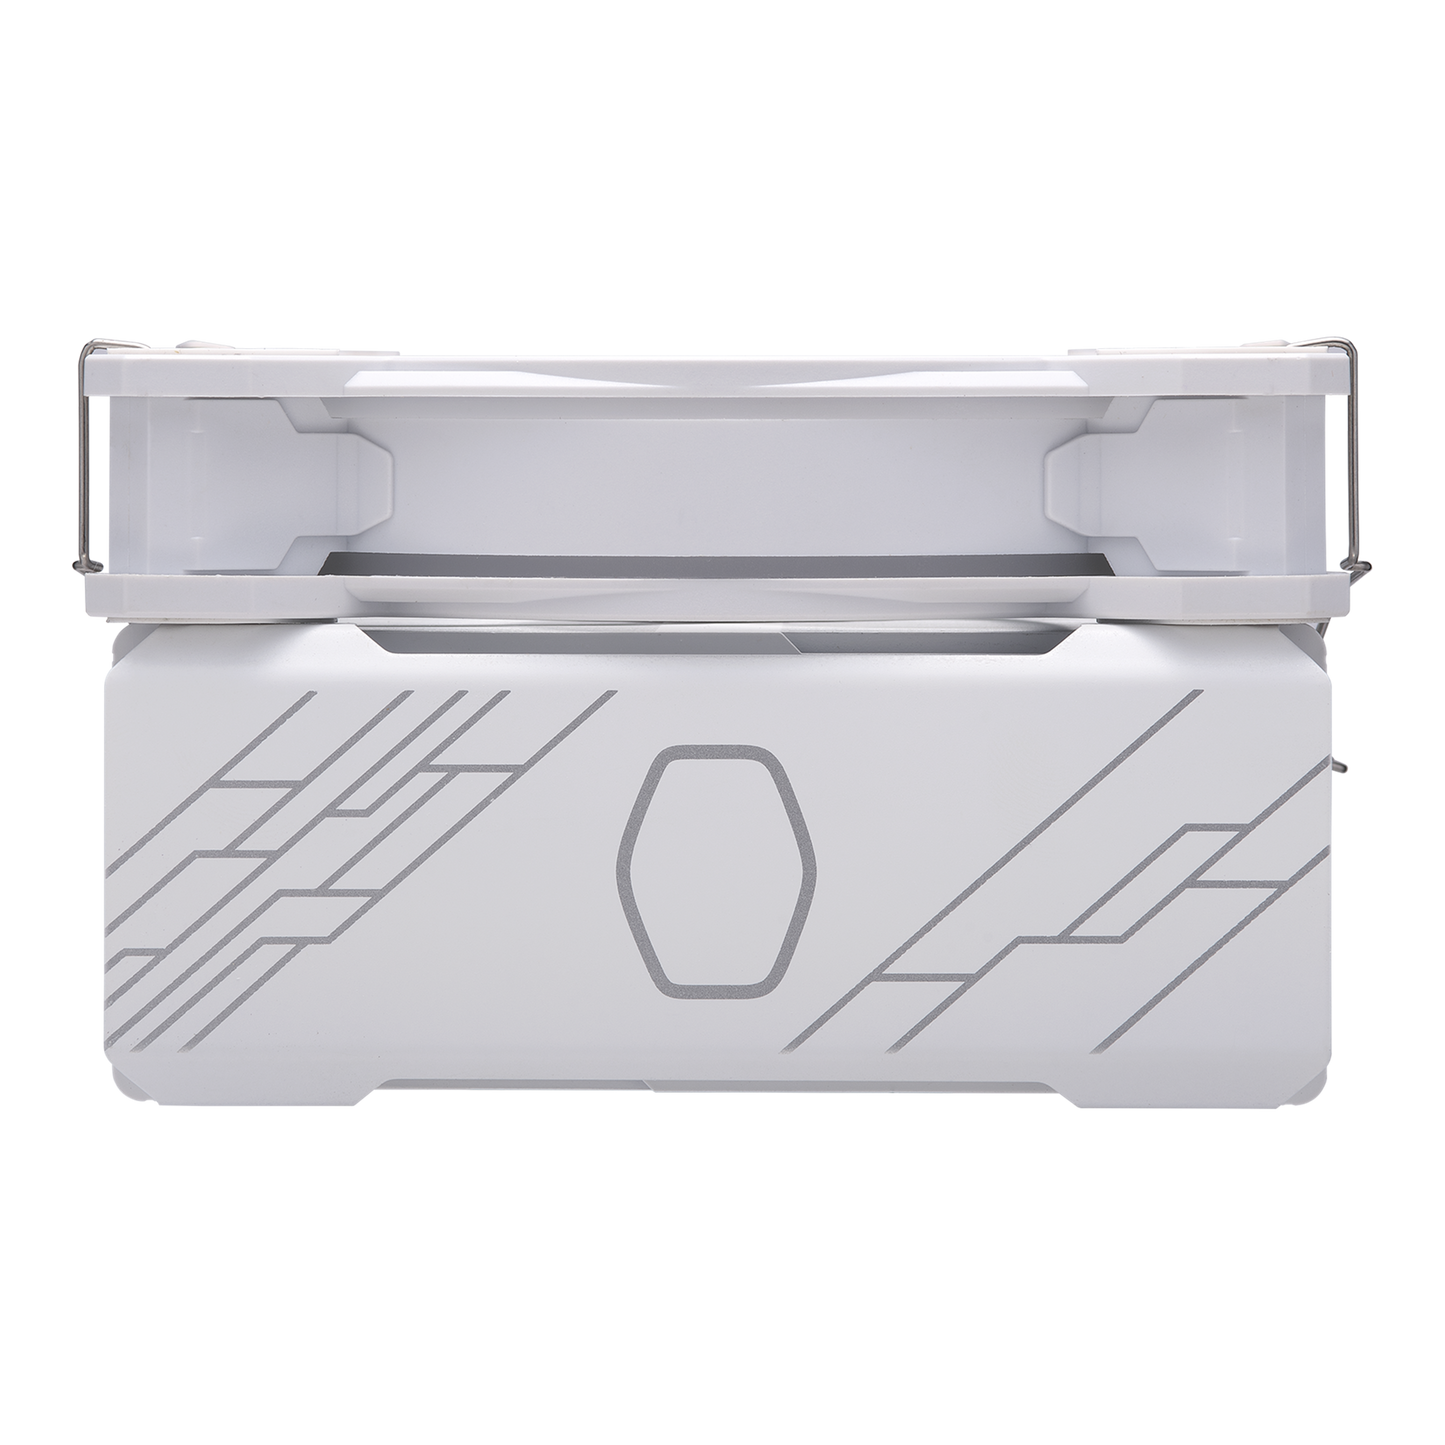 Cooler Master Hyper 212 Halo - CPU Air Cooler - White